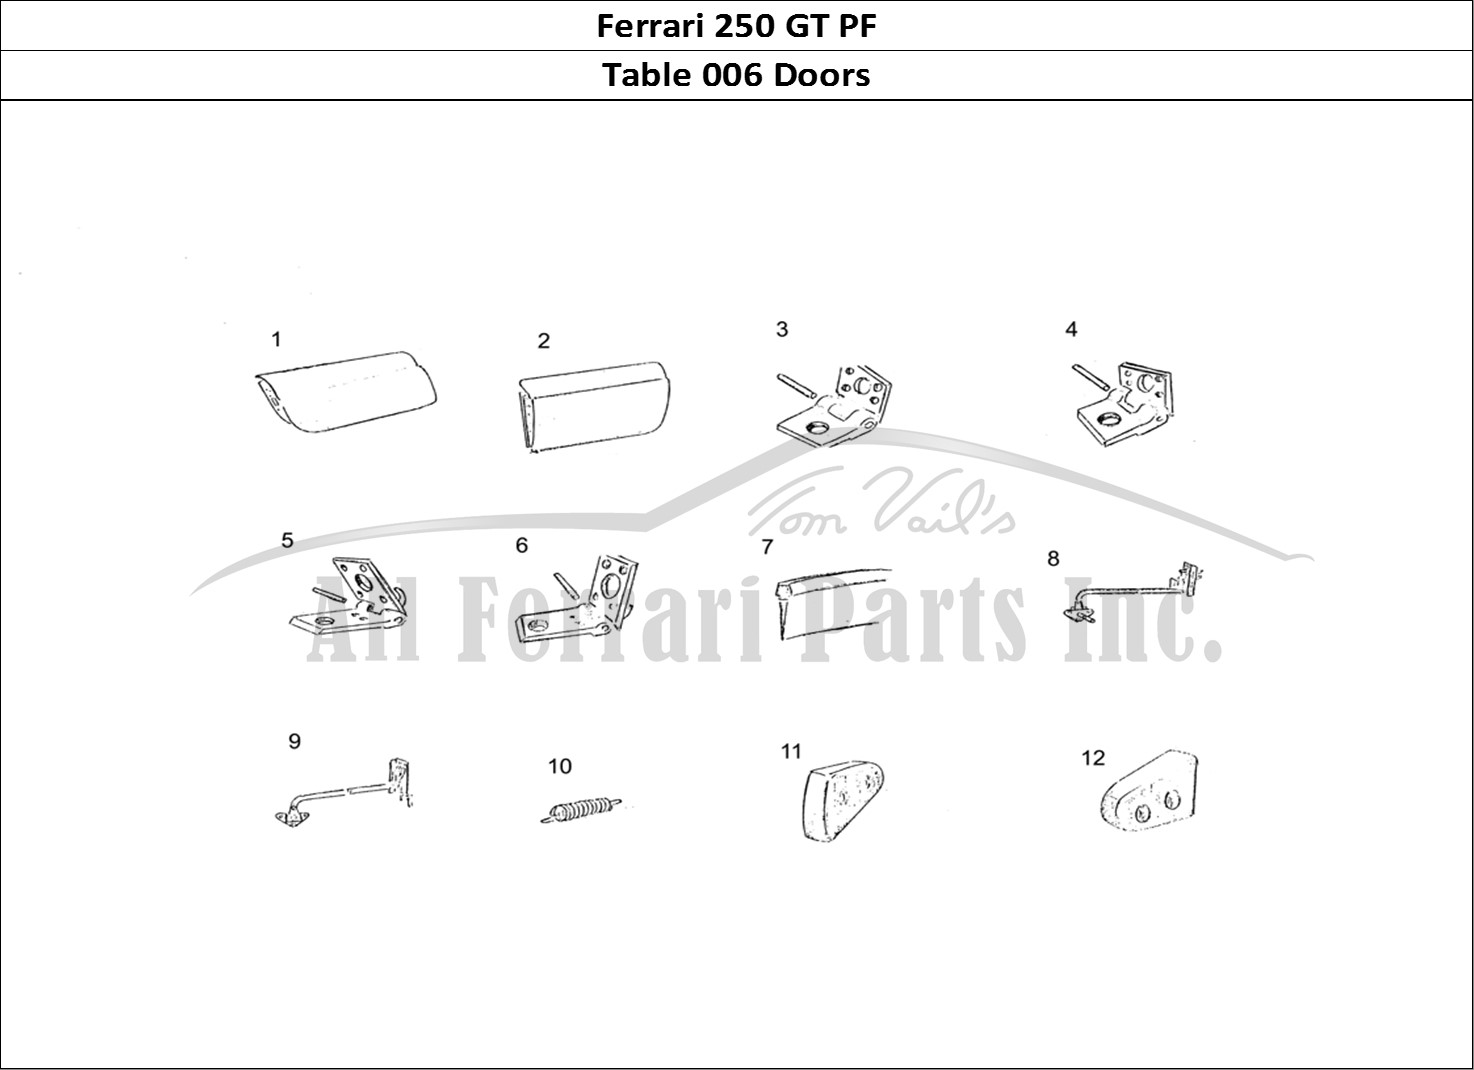 Ferrari Parts Ferrari 250 GT (Coachwork) Page 006 Door